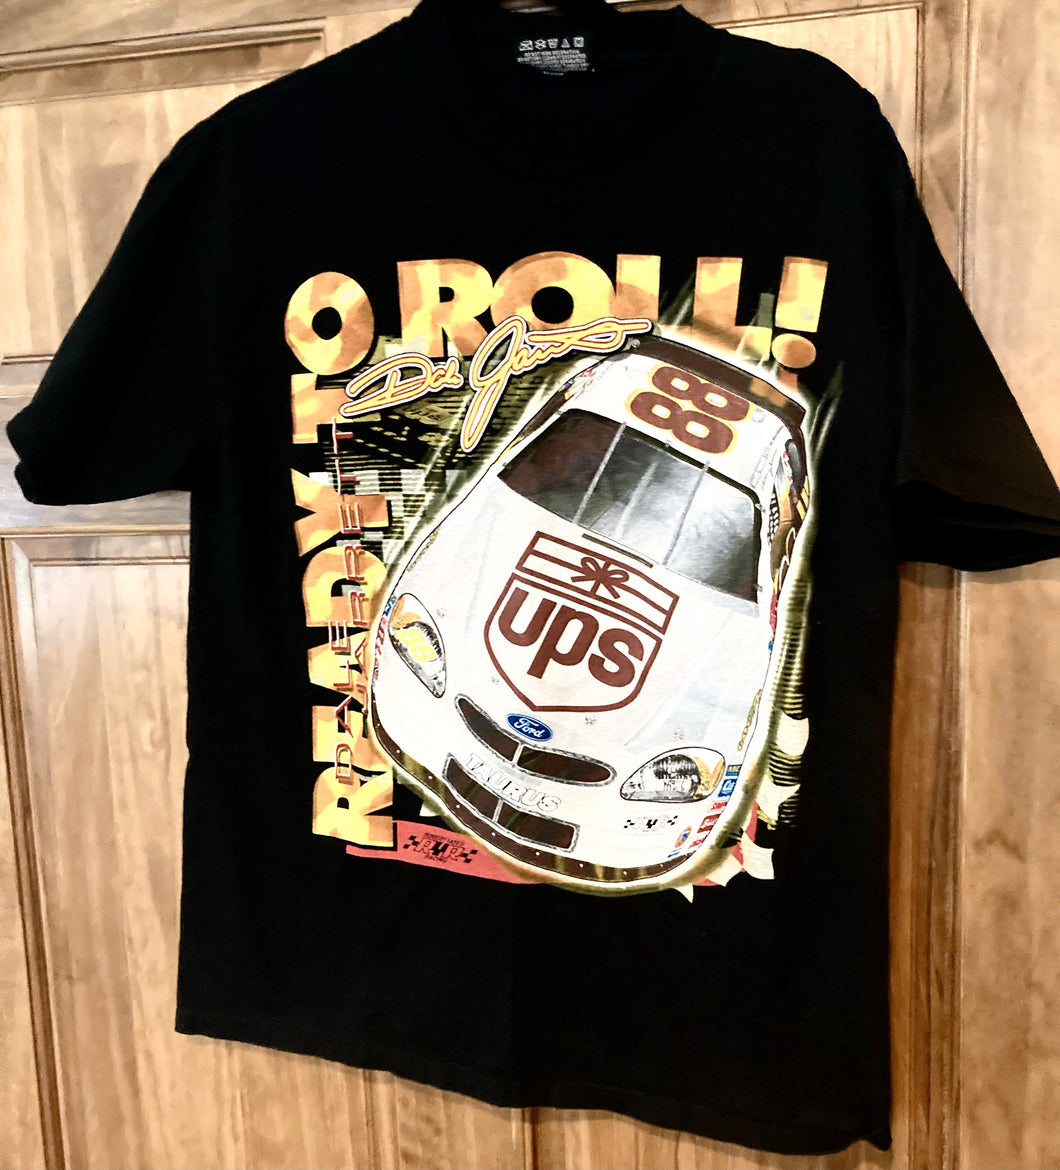 Dale Jarrett 88 NASCAR Ford Taurus UPS Double Sided Vintage Graphic Print T-Shirt Chase Authentics Men’s Size Medium